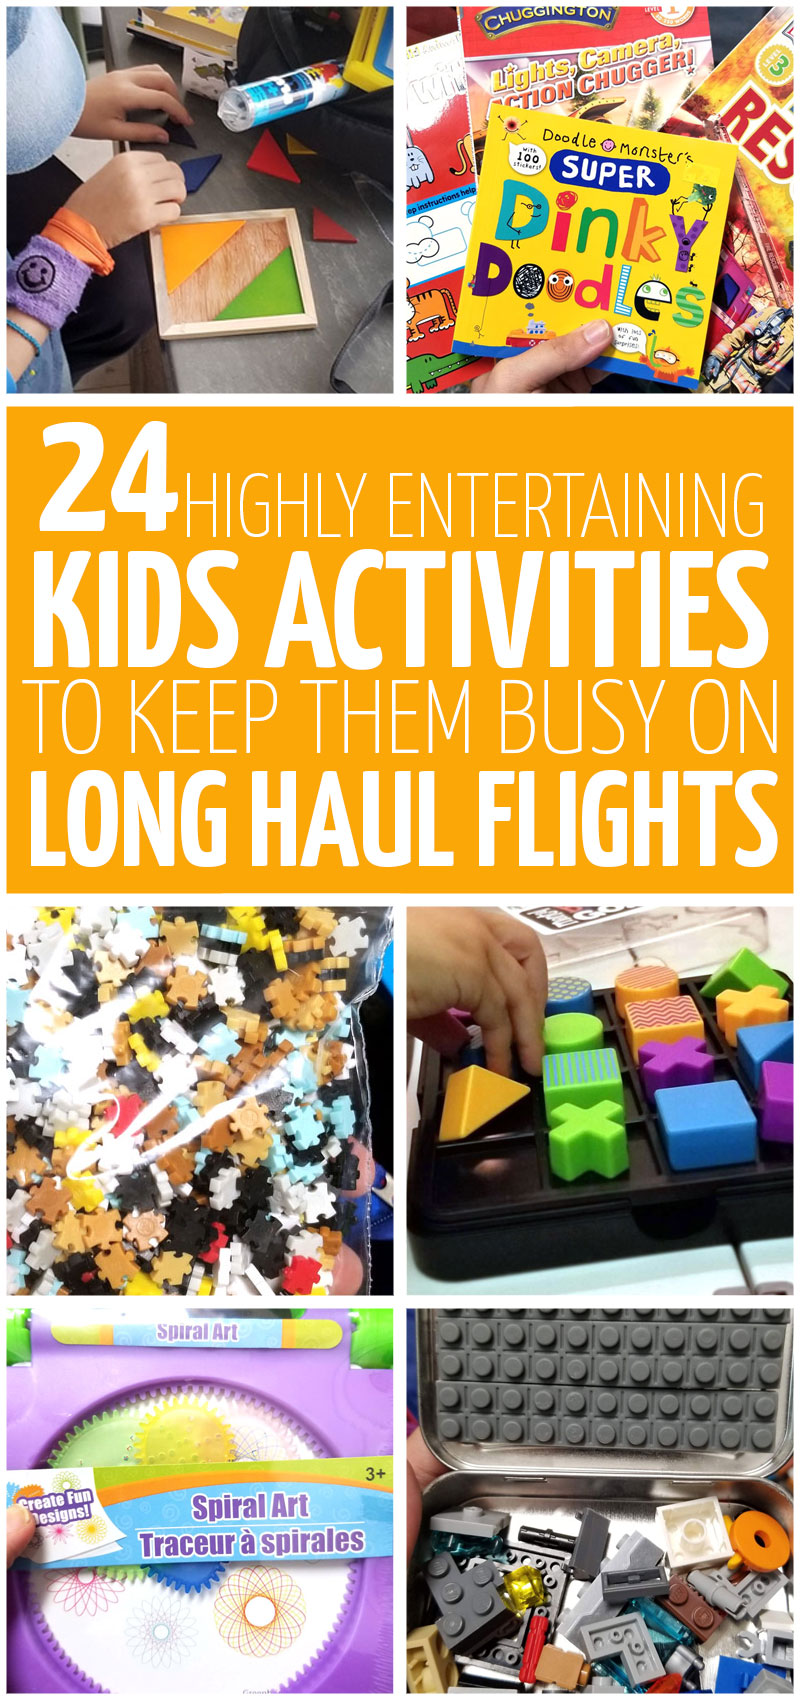 https://www.momsandcrafters.com/wp-content/uploads/2019/10/airplane-activities-for-kids-v1.jpg.webp